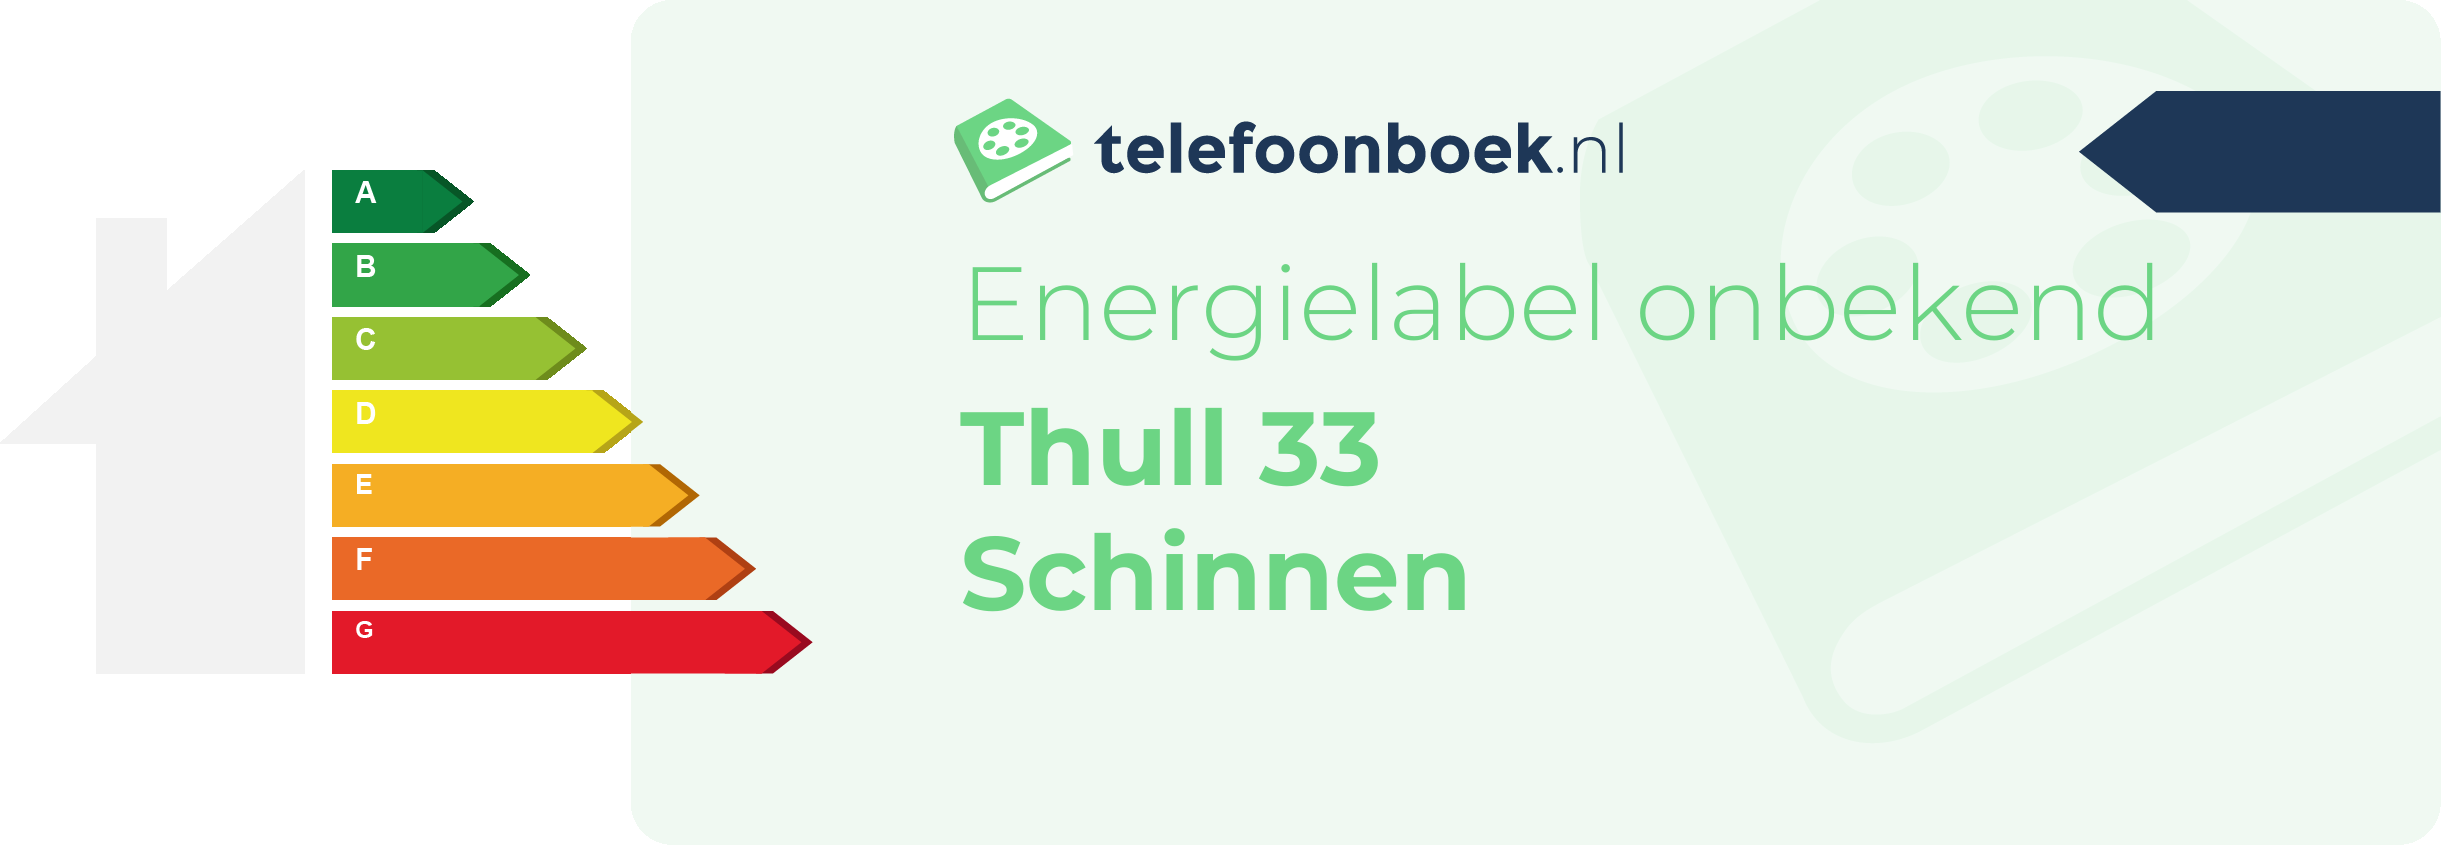 Energielabel Thull 33 Schinnen